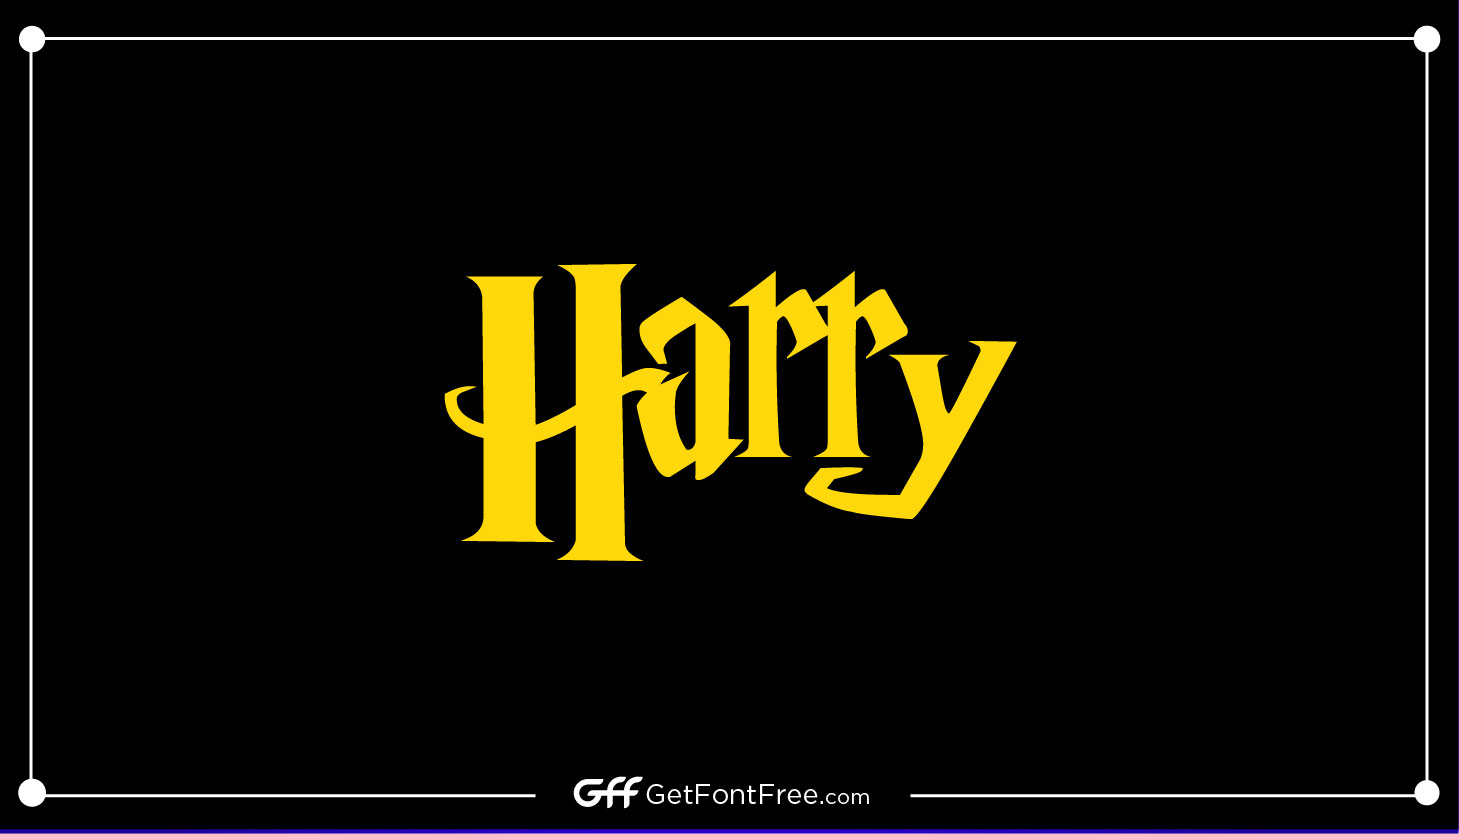 Harry Potter Font